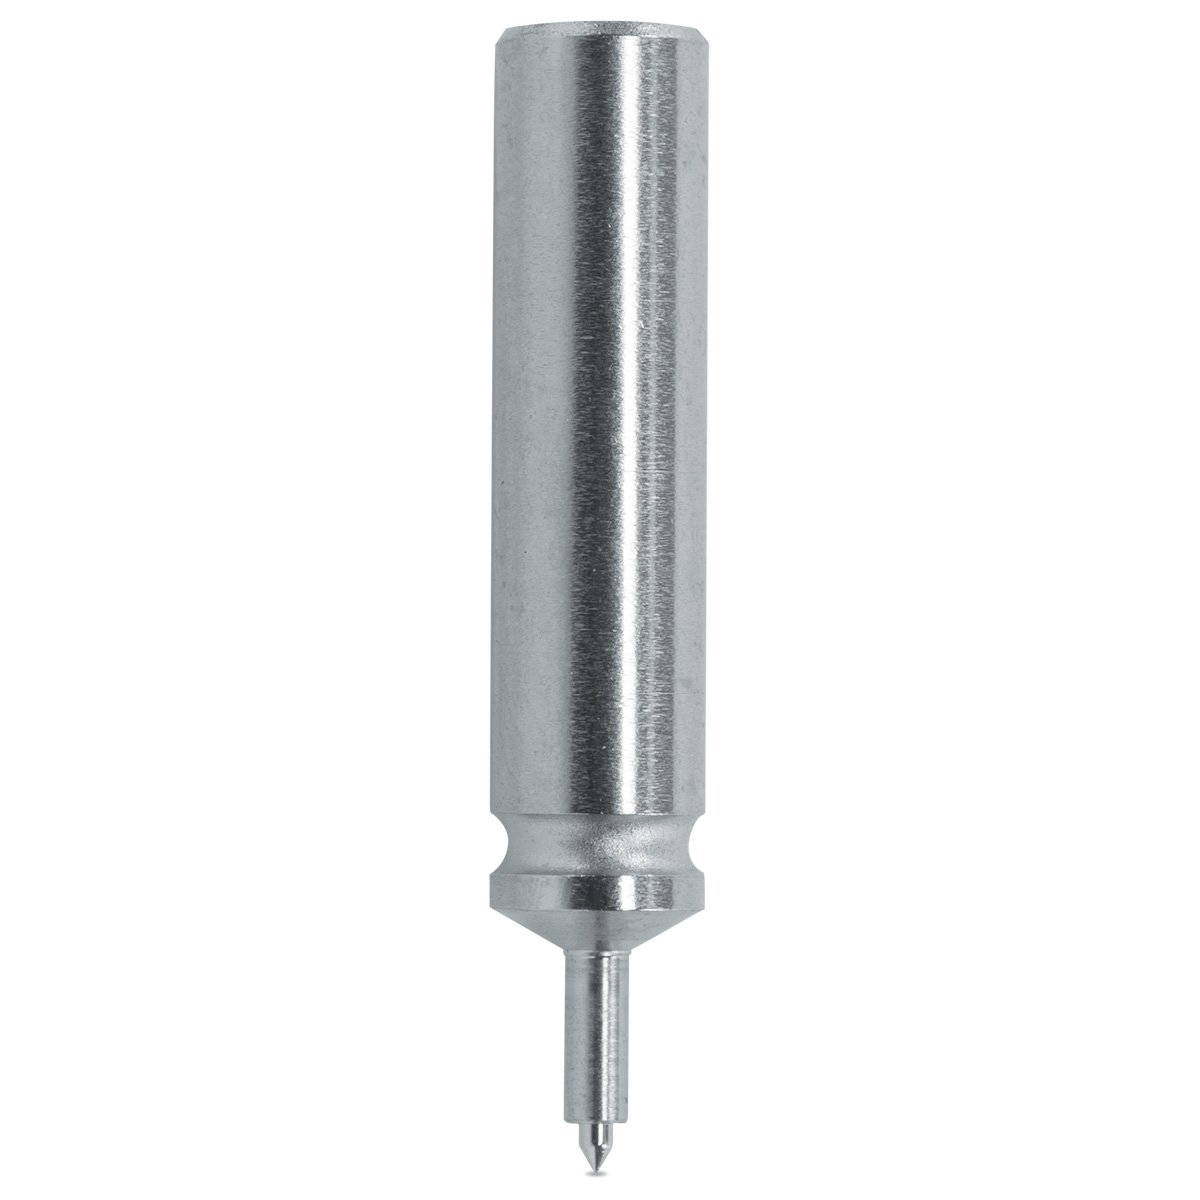 Pump pusher Horia 1030-03, Ø body 3 mm, Ø tip 0,4 mm, support Ø 0,5 mm